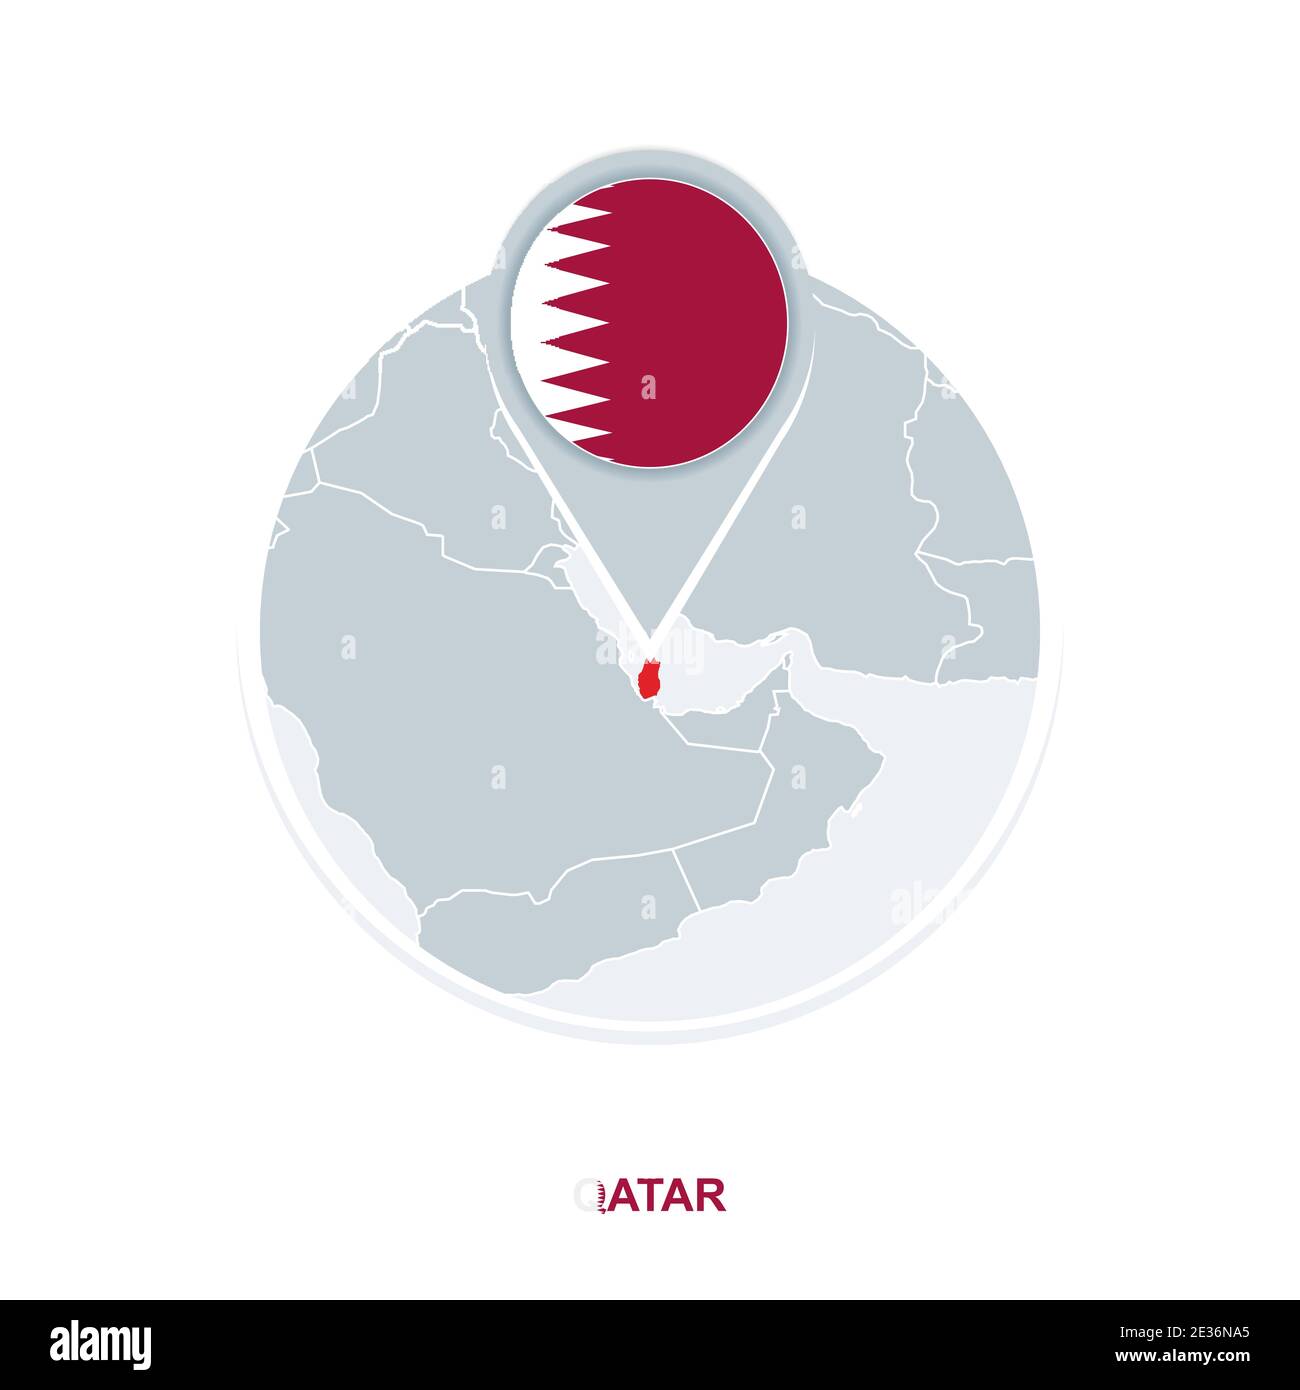 Qatar Map Shape and Flag Design Magnet